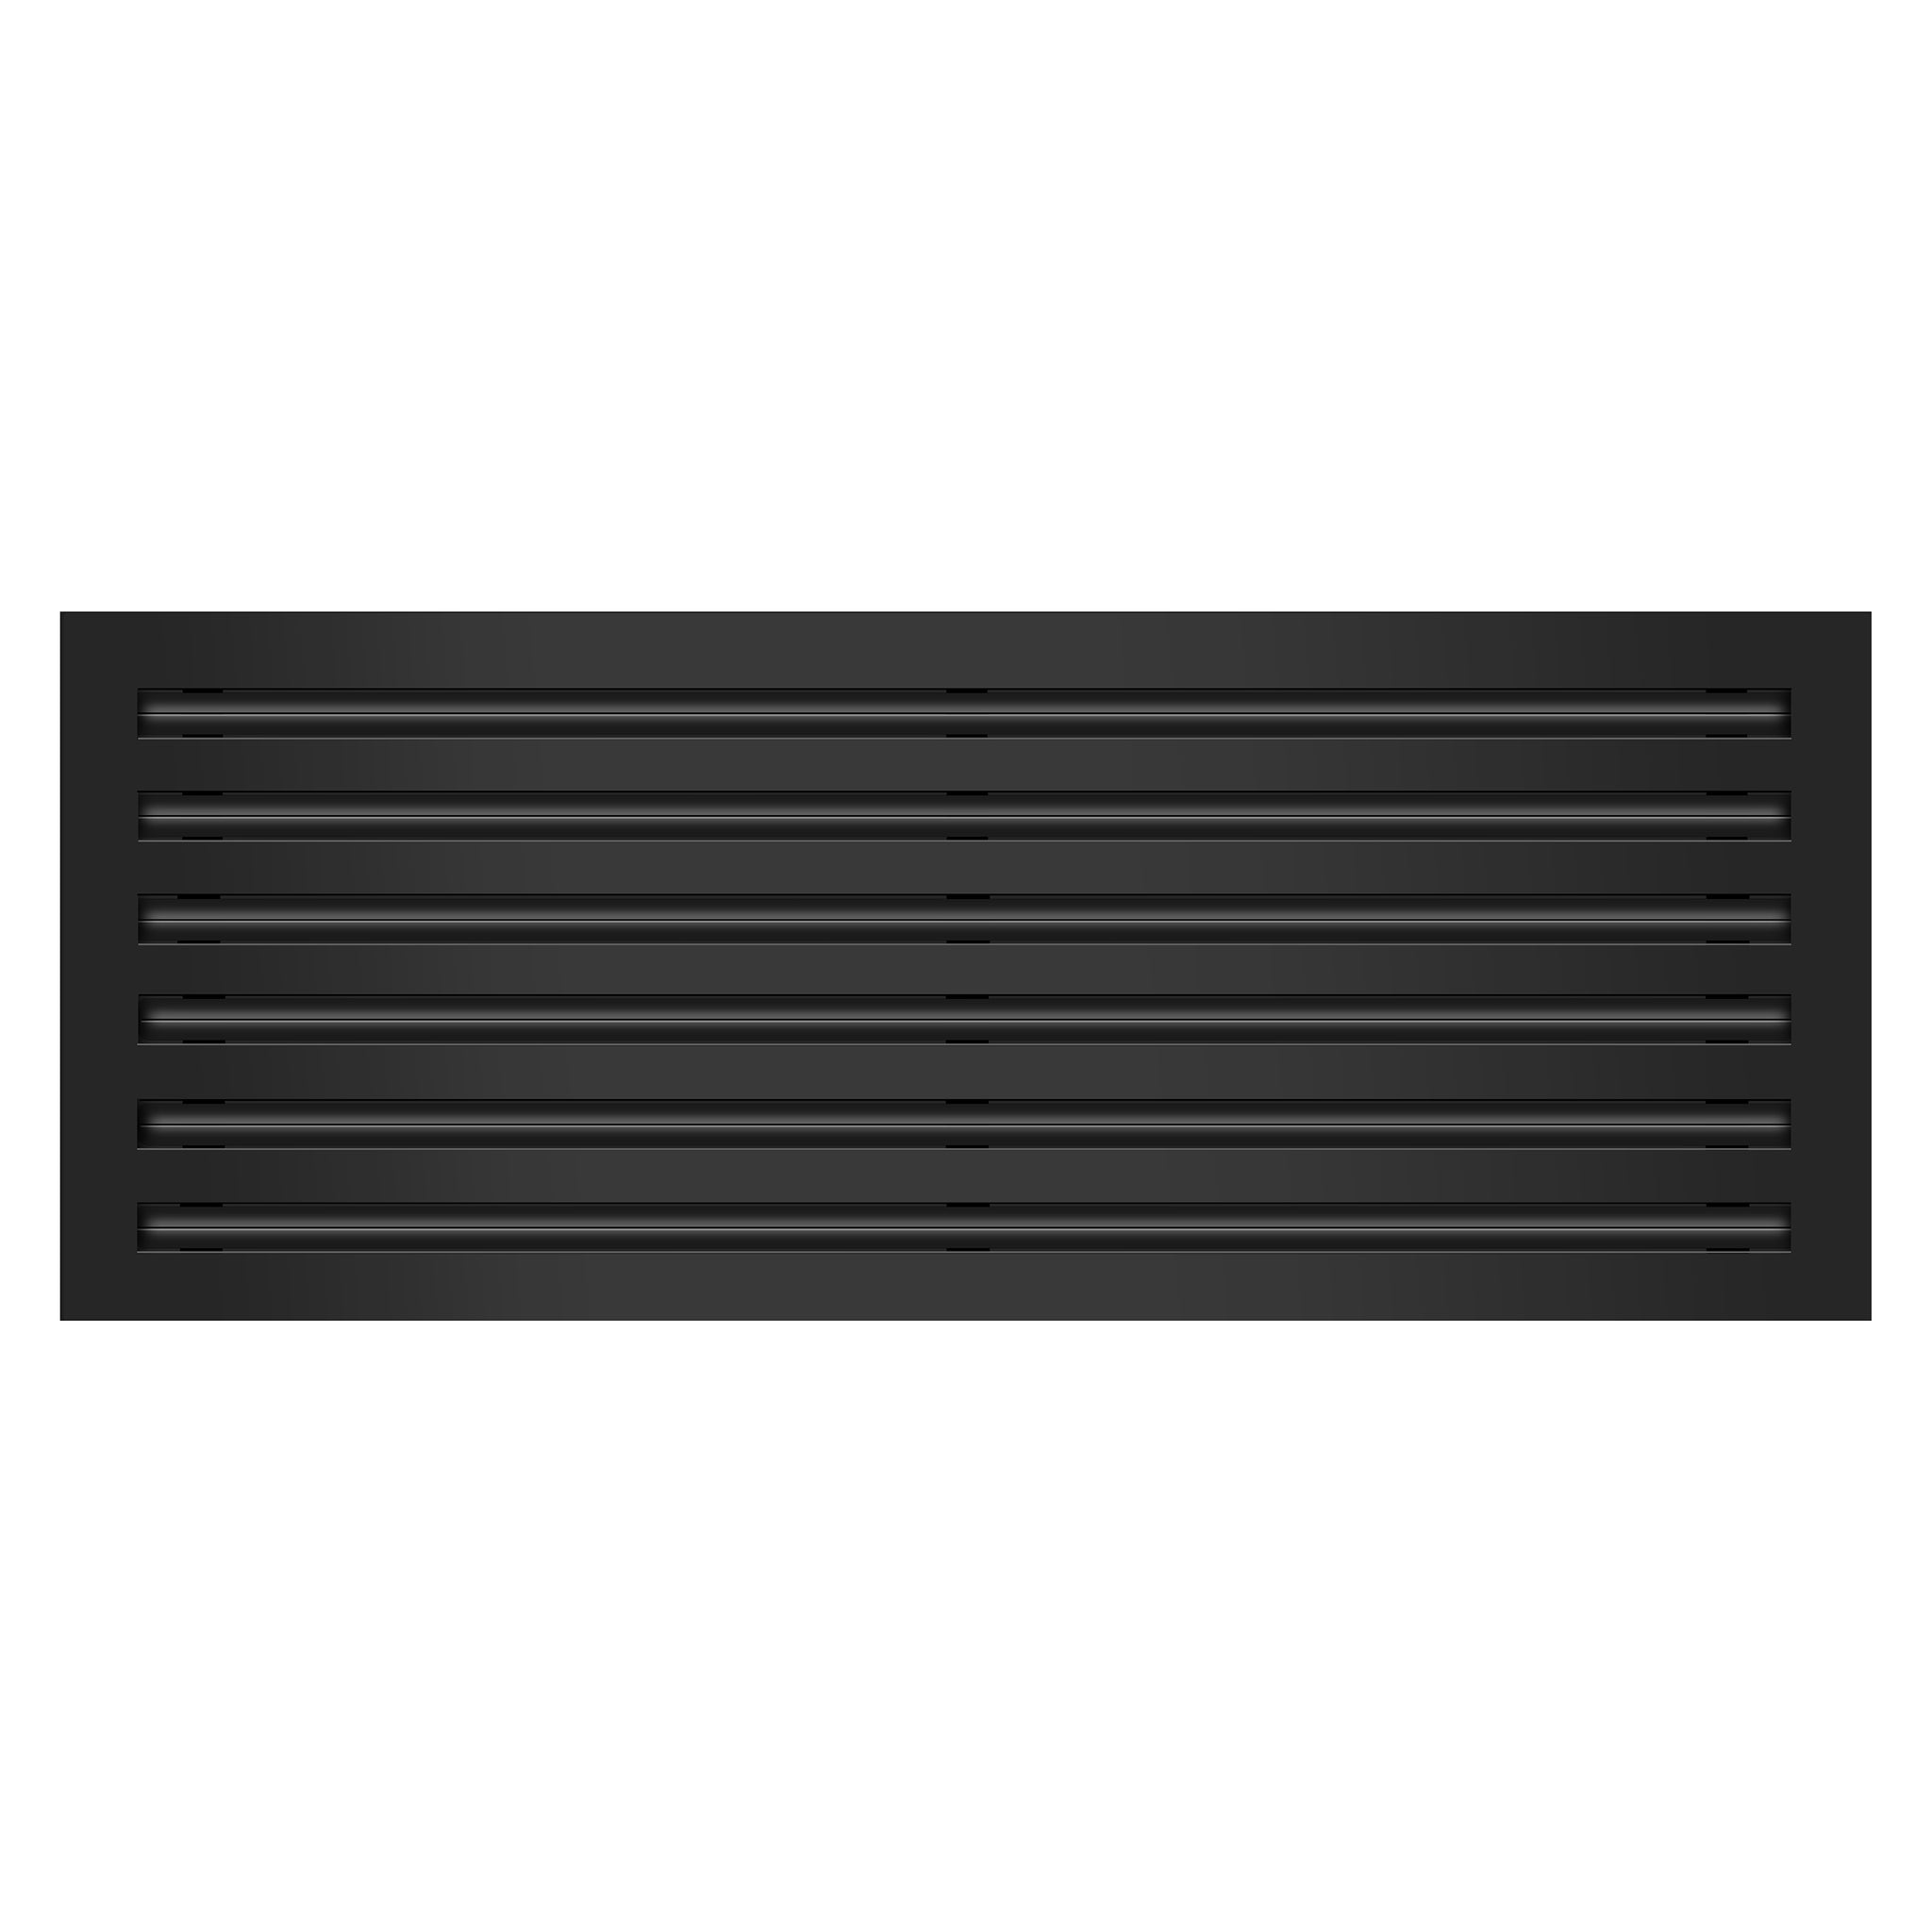 Front View of 30x12 Modern Air Vent Cover Black - 30x12 Standard Linear Slot Diffuser Black - Texas Buildmart